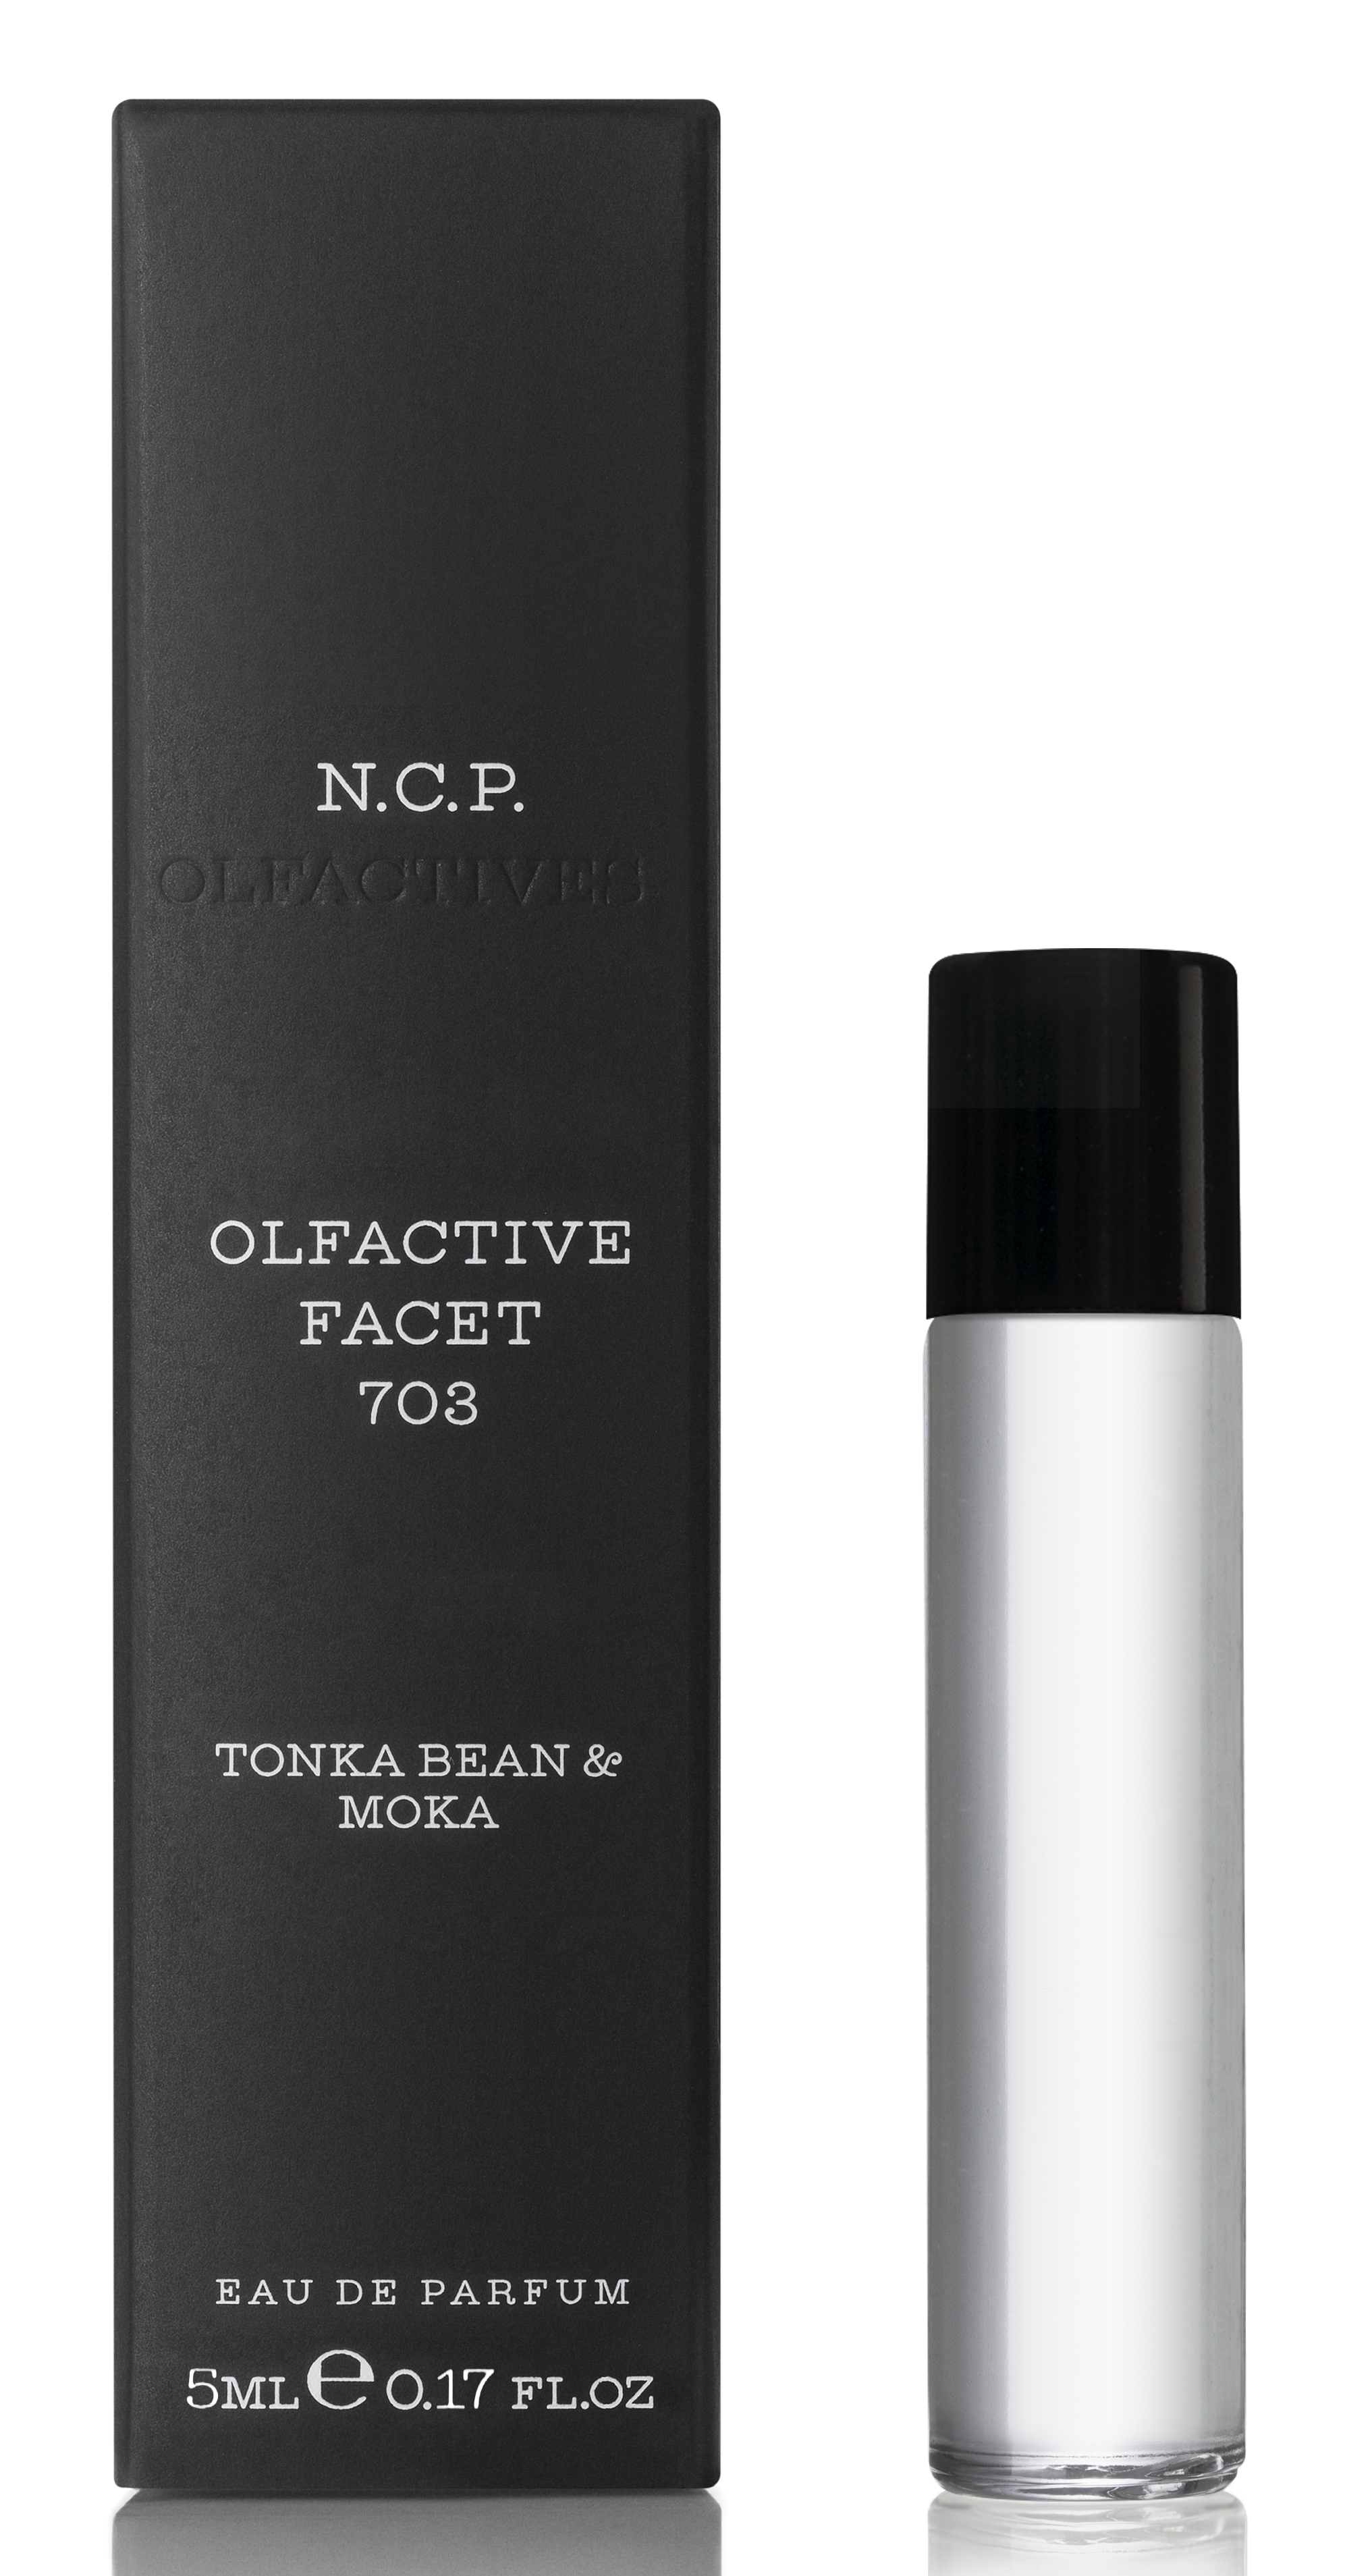 n.c.p. olfactive facet 703 - tonka bean & moka woda perfumowana 5 ml   